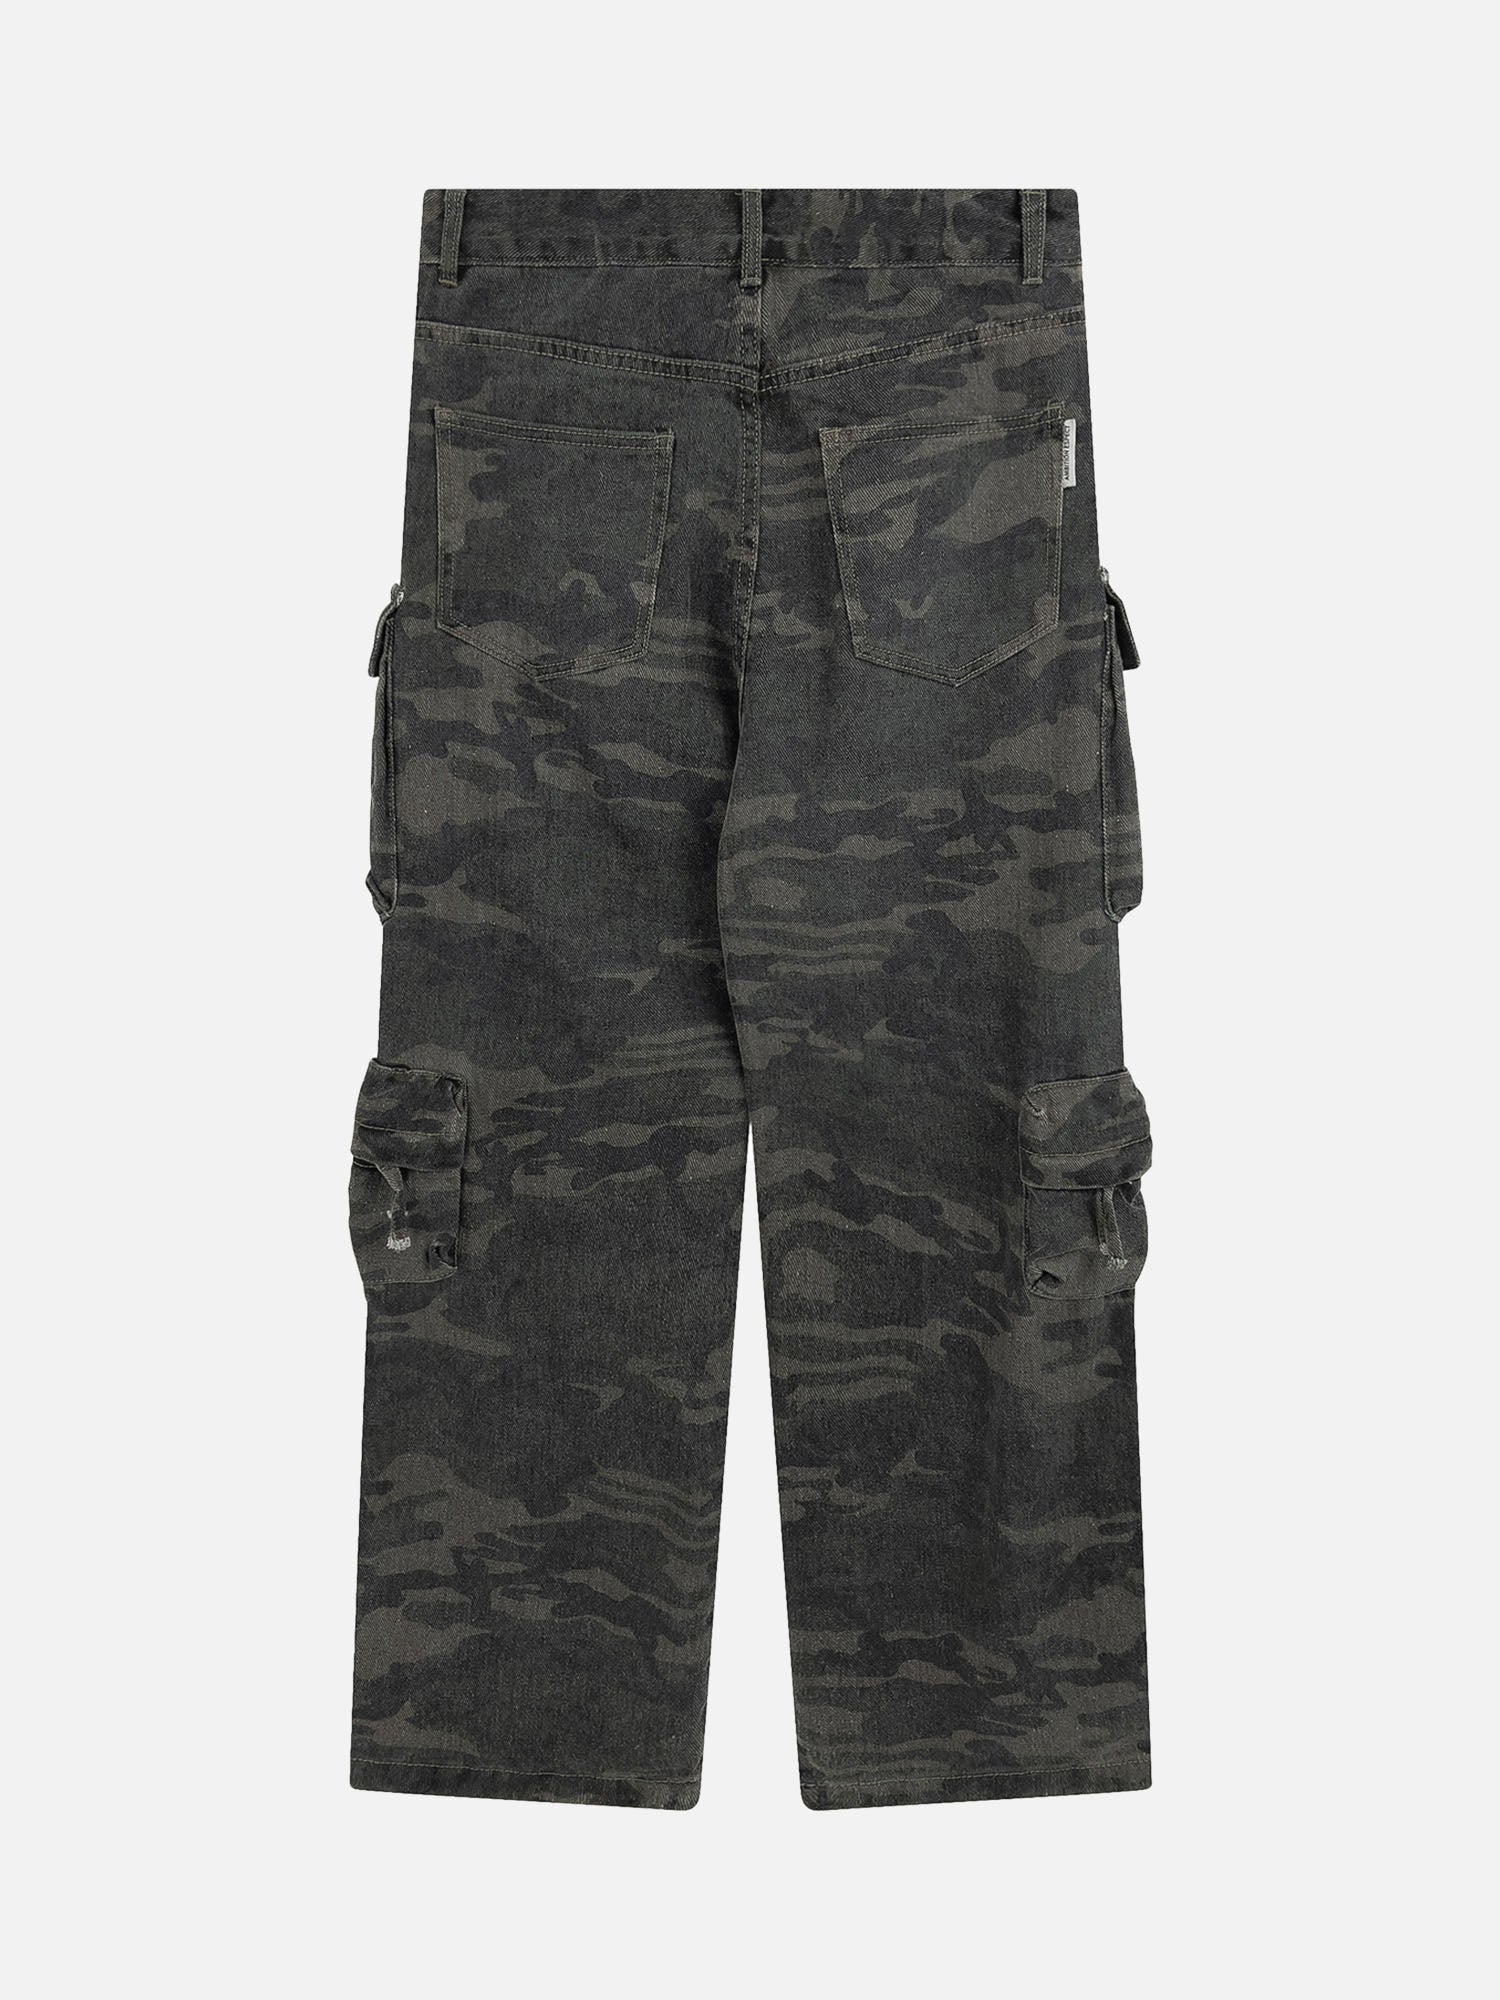 American Street Fashion Heavy Duty Camouflage Work Jeans